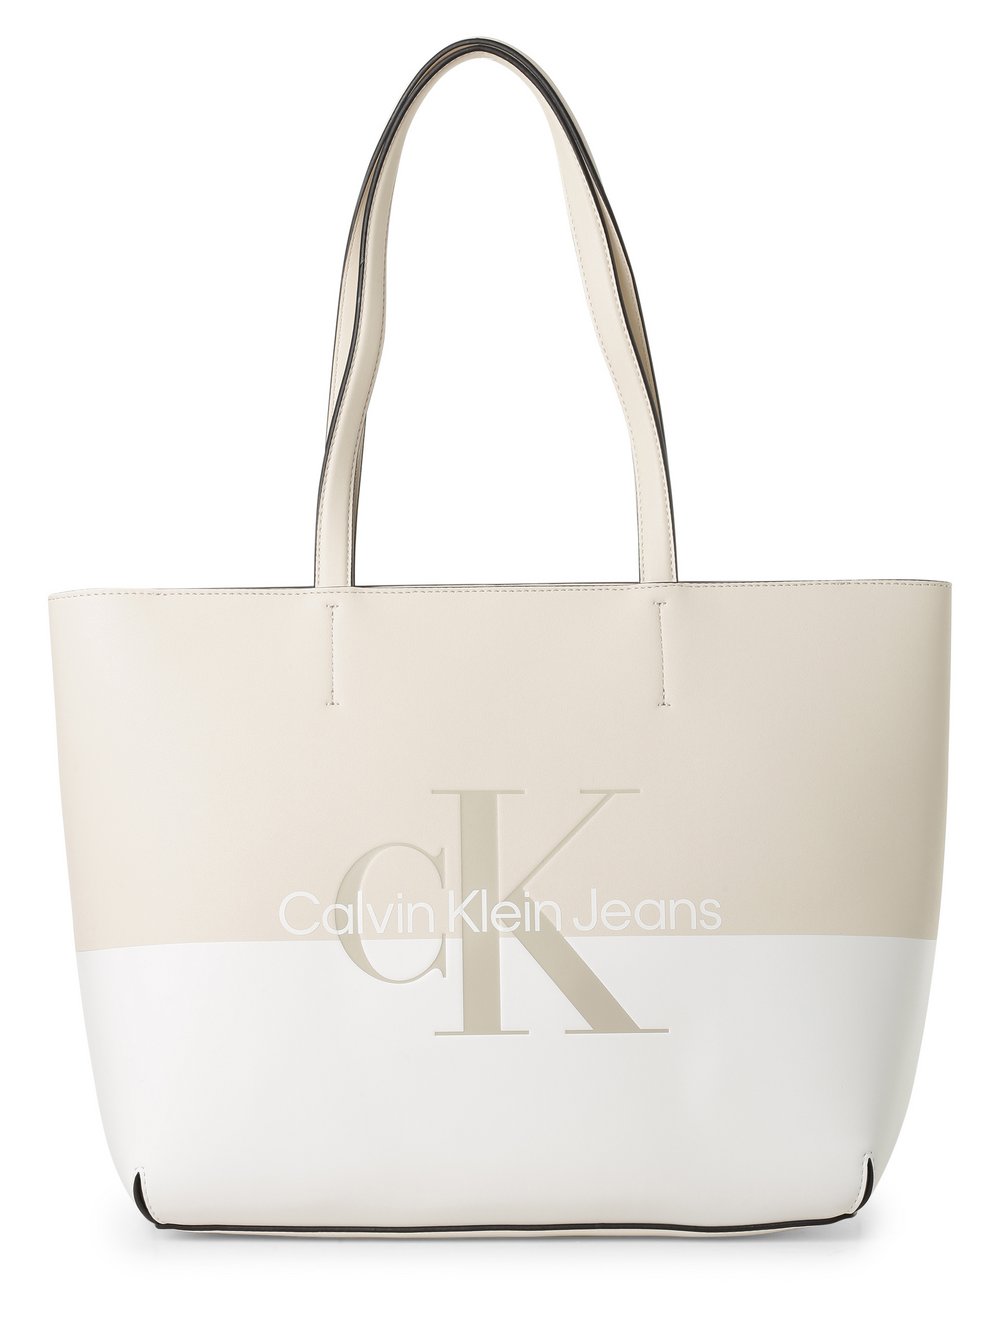 Calvin Klein Jeans - Damska torba shopper, beżowy|biały